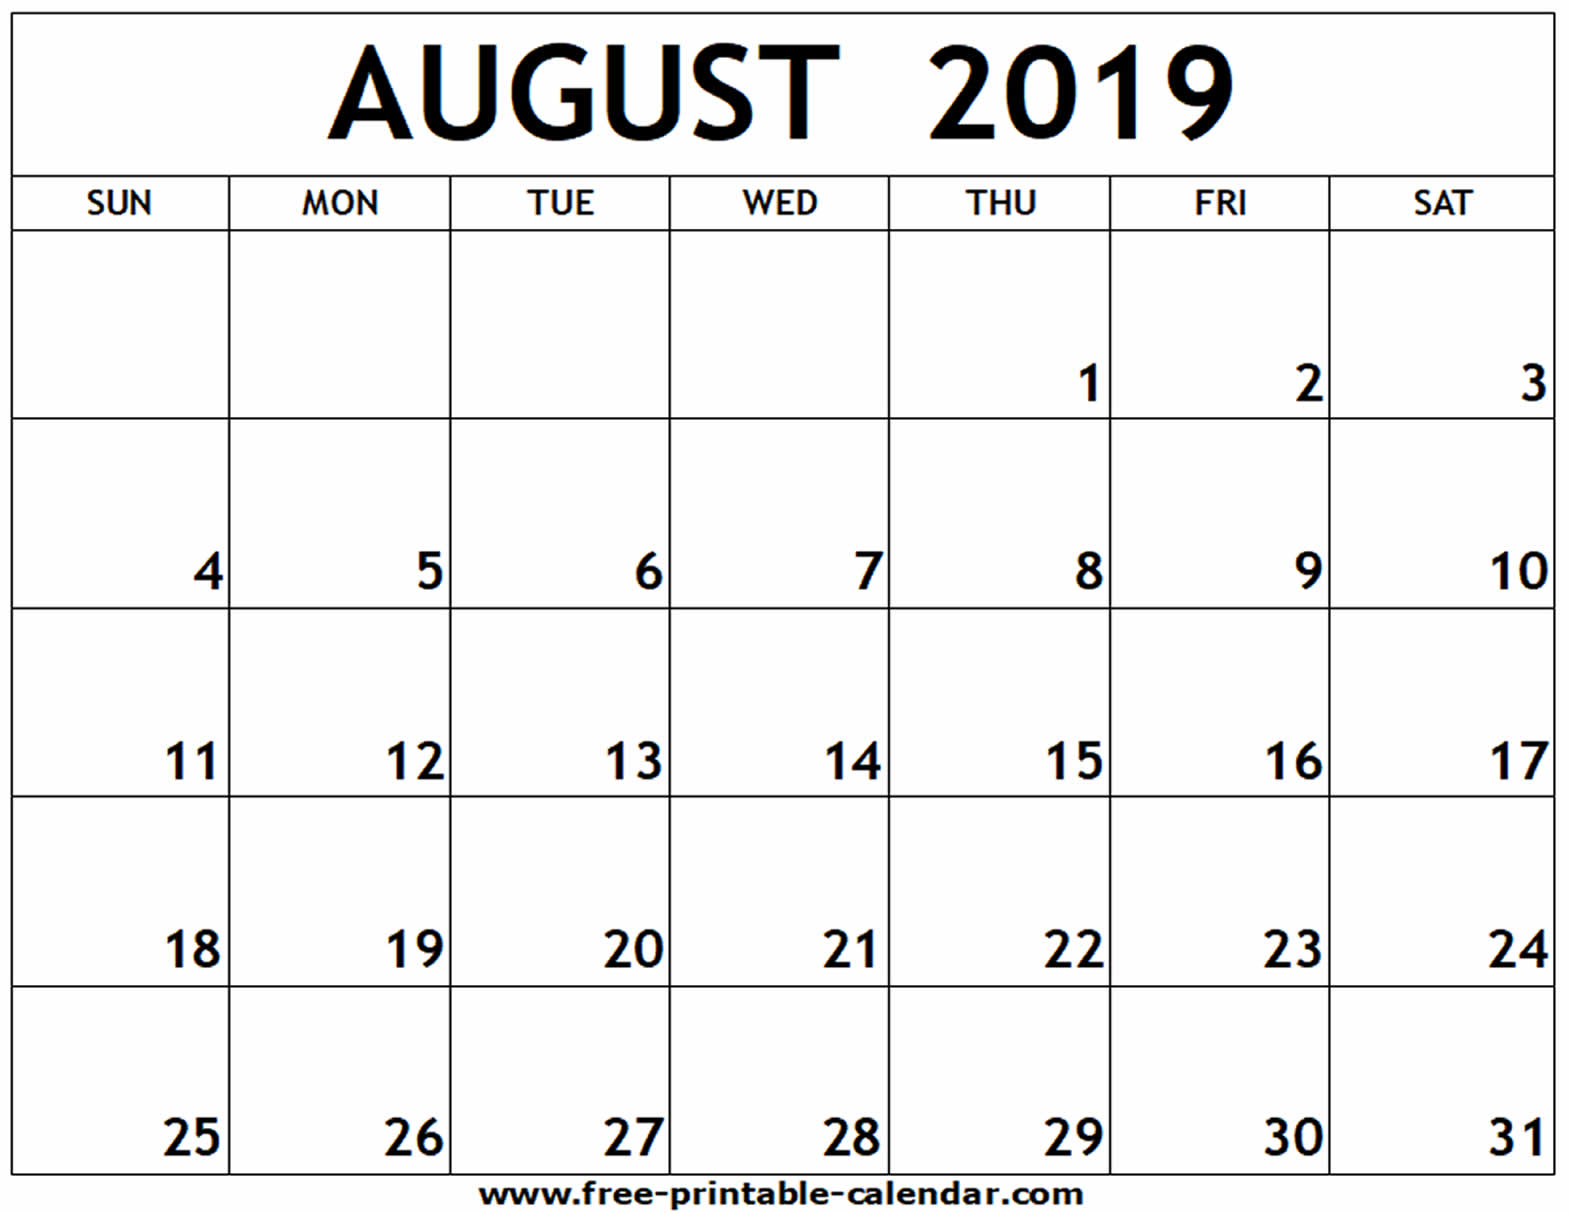 August 2019 Printable Calendar - Free-Printable-Calendar